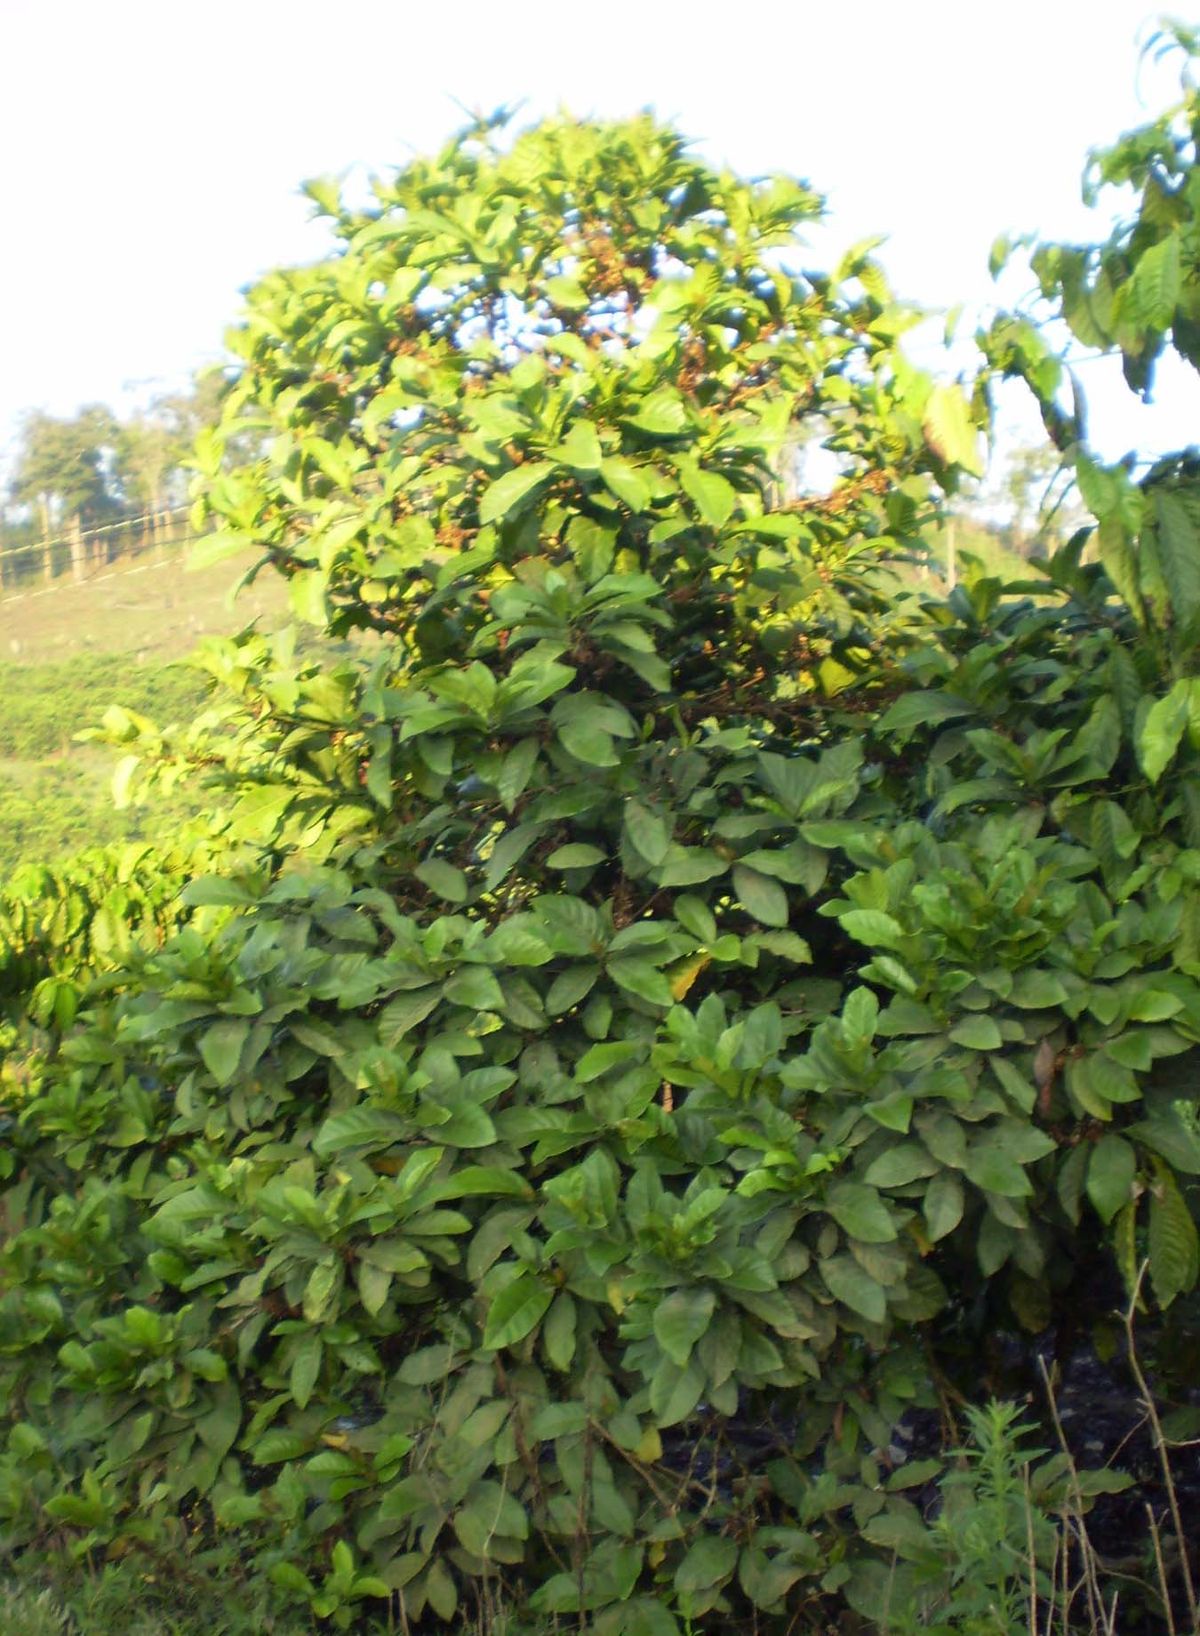 Liberica coffee plant